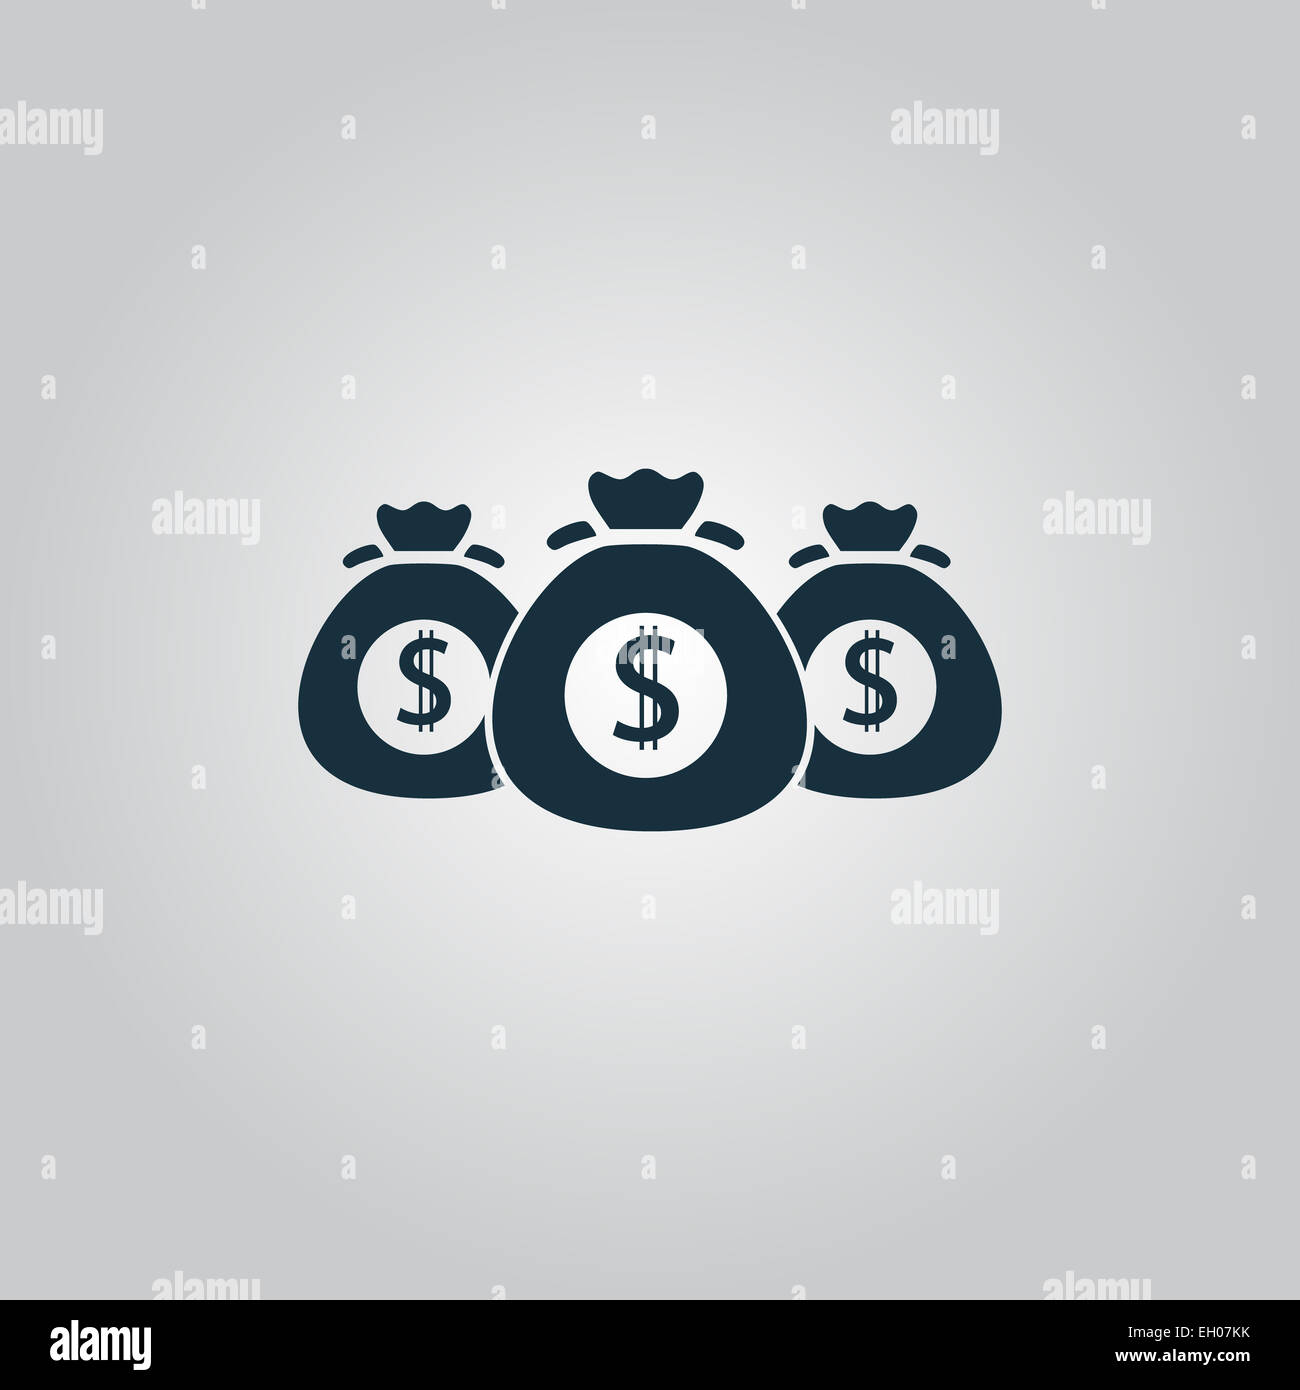 Money bag icon Stock Photo